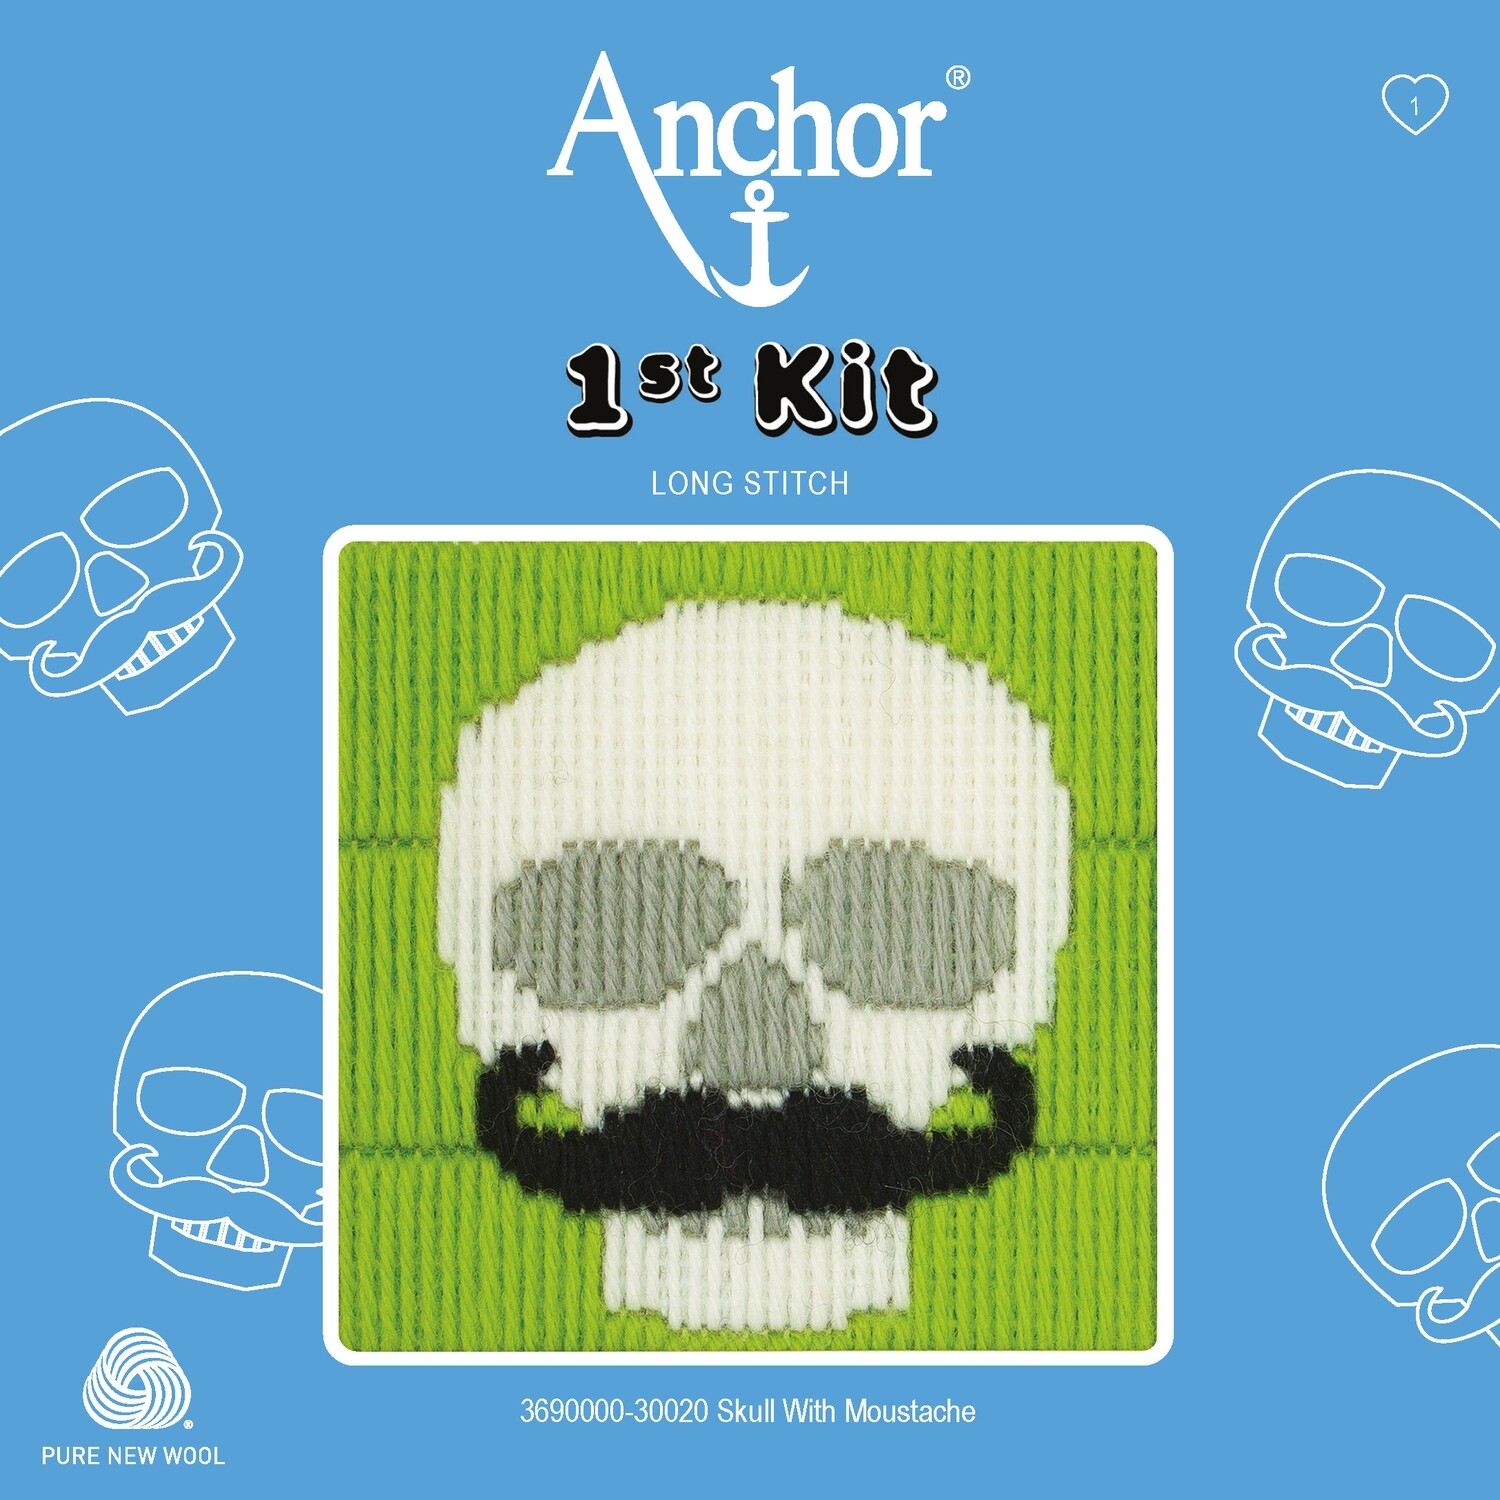 Anchor 1st Kit - Skull with Moustache